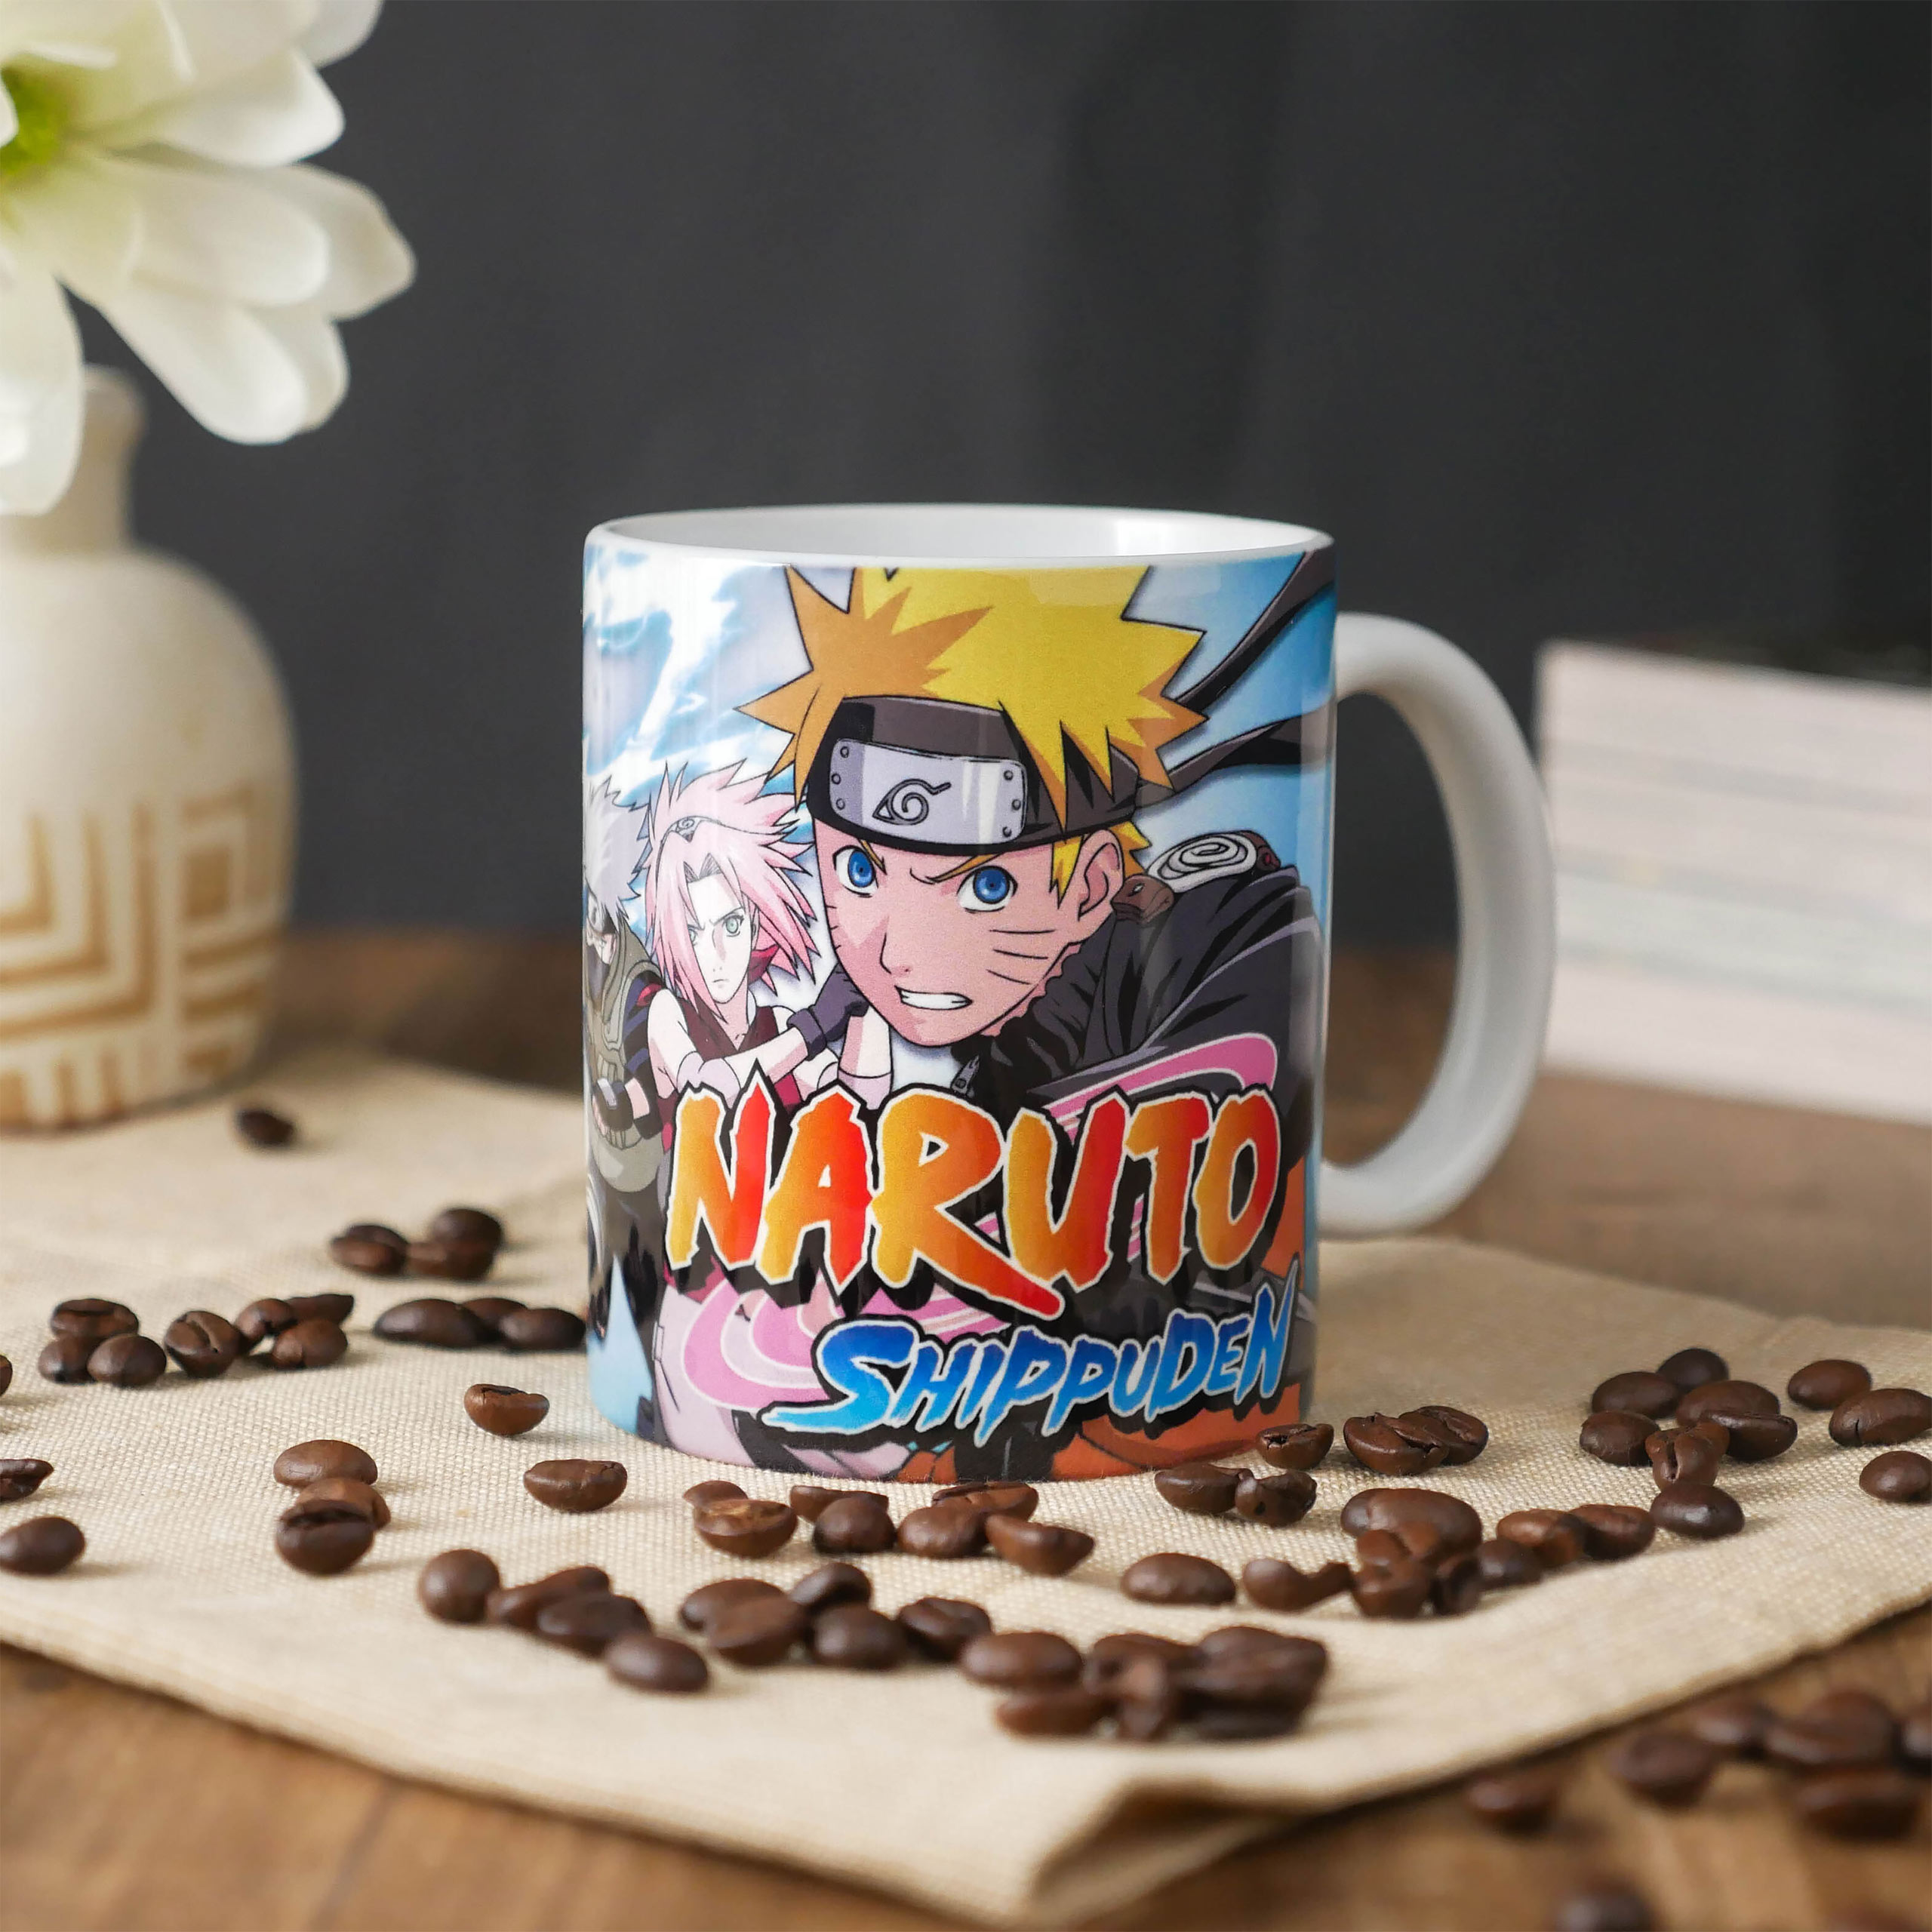 Naruto Shippuden - Group Cup